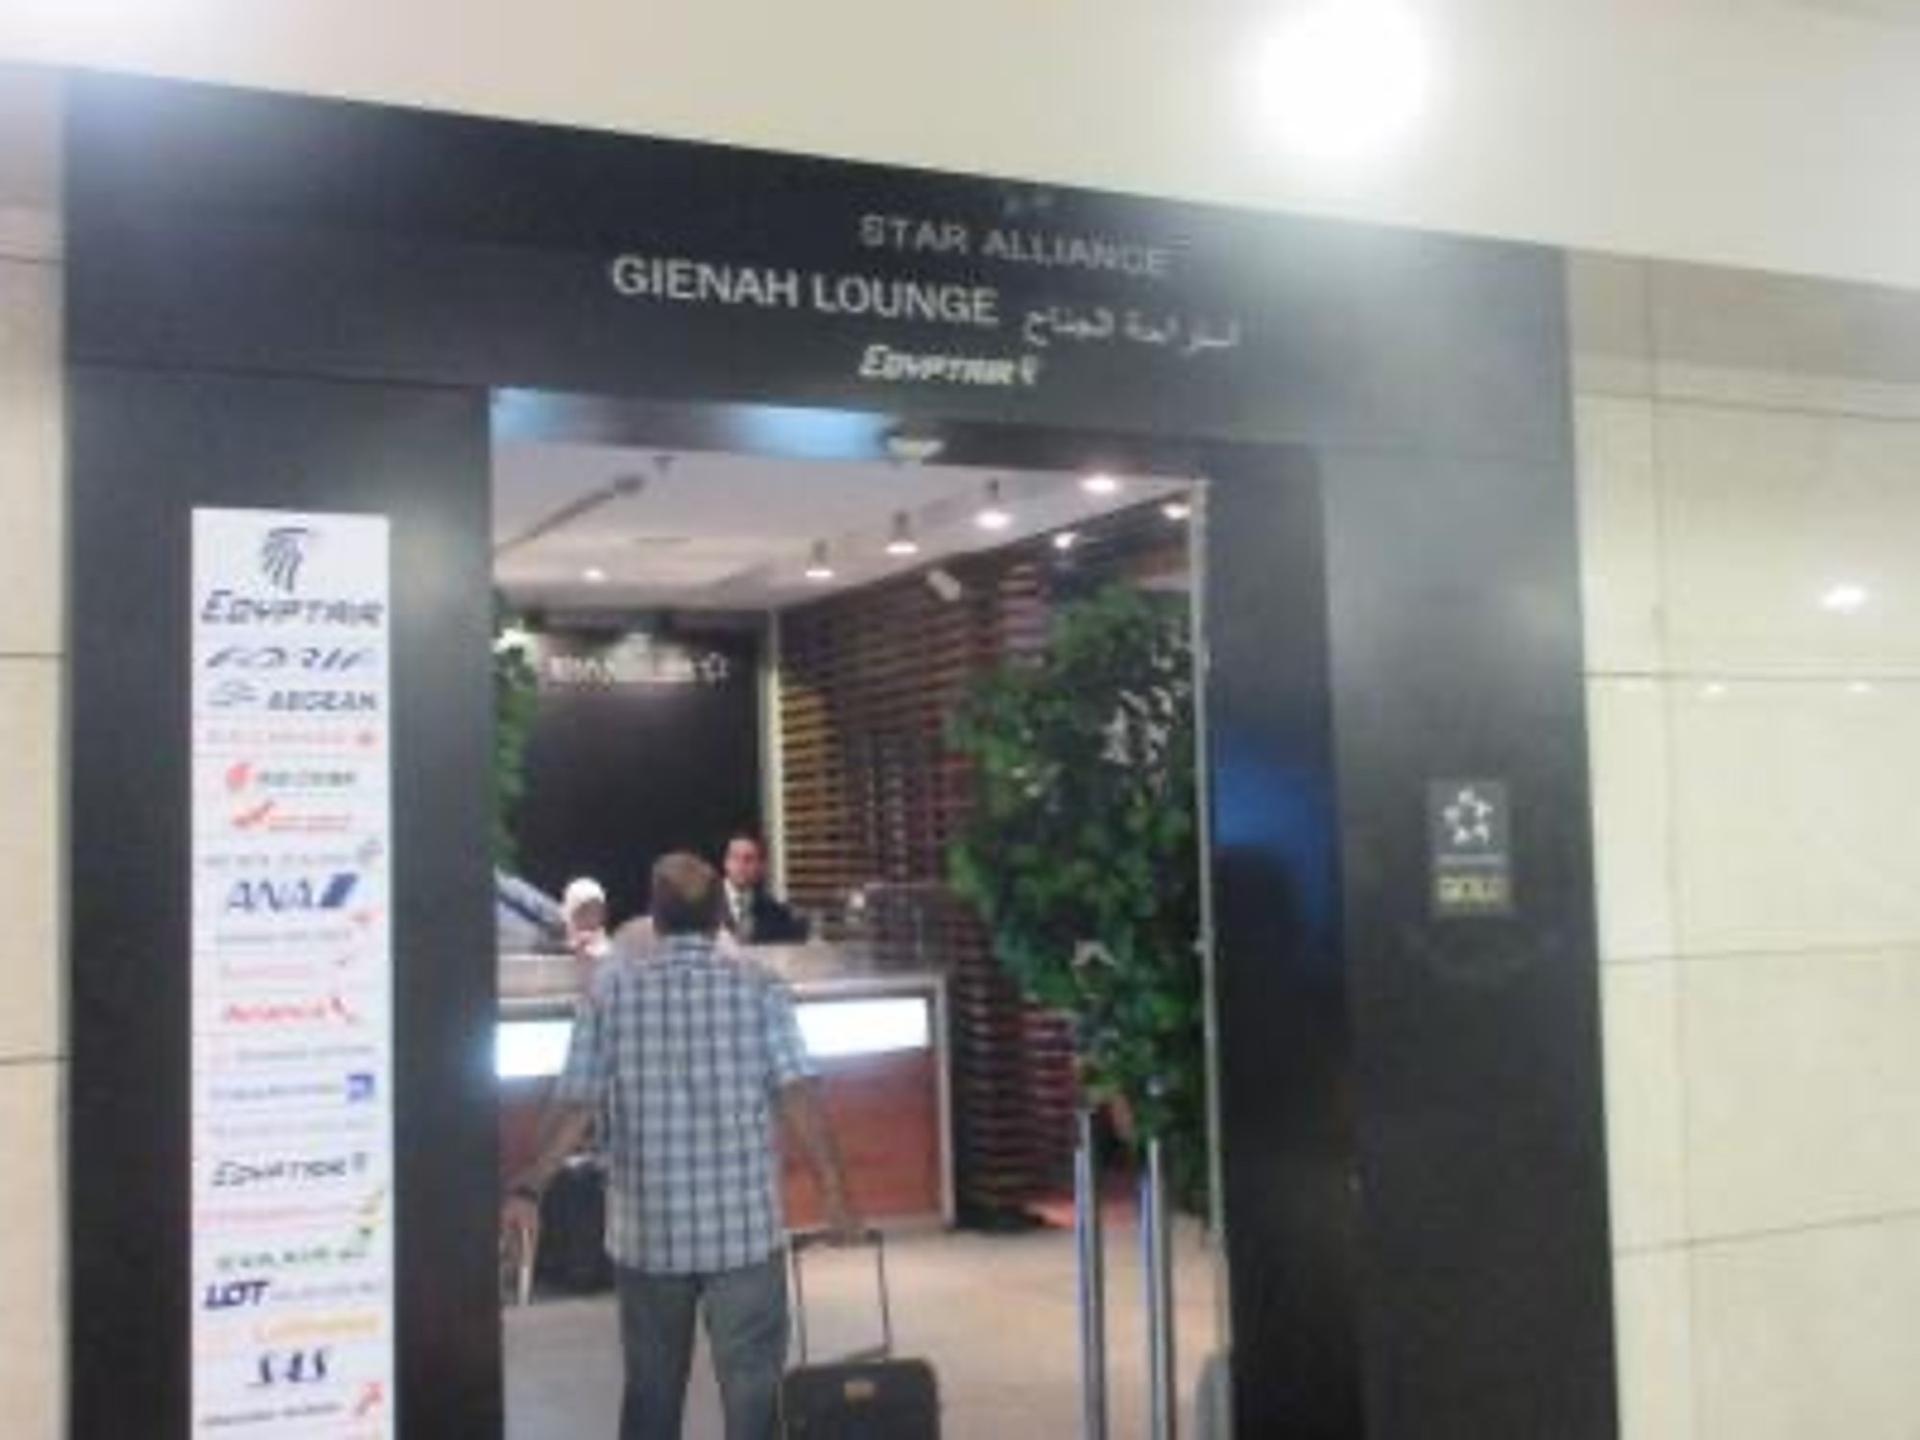 Egyptair Gienah Lounge image 3 of 4